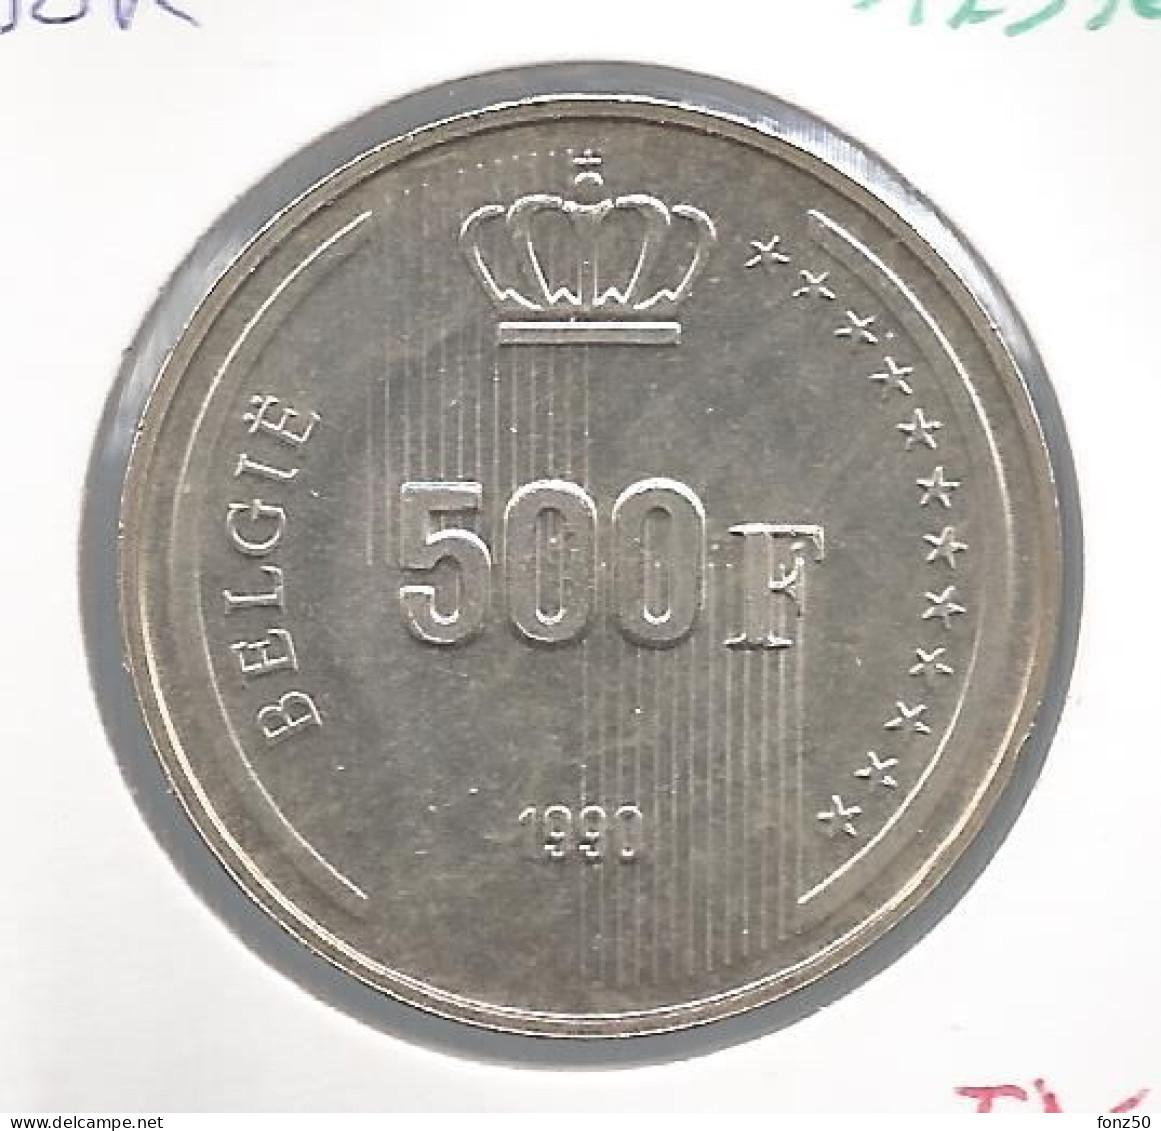 BOUDEWIJN * 500 Frank 1990 Vlaams * F D C * Nr 12376 - 500 Frank